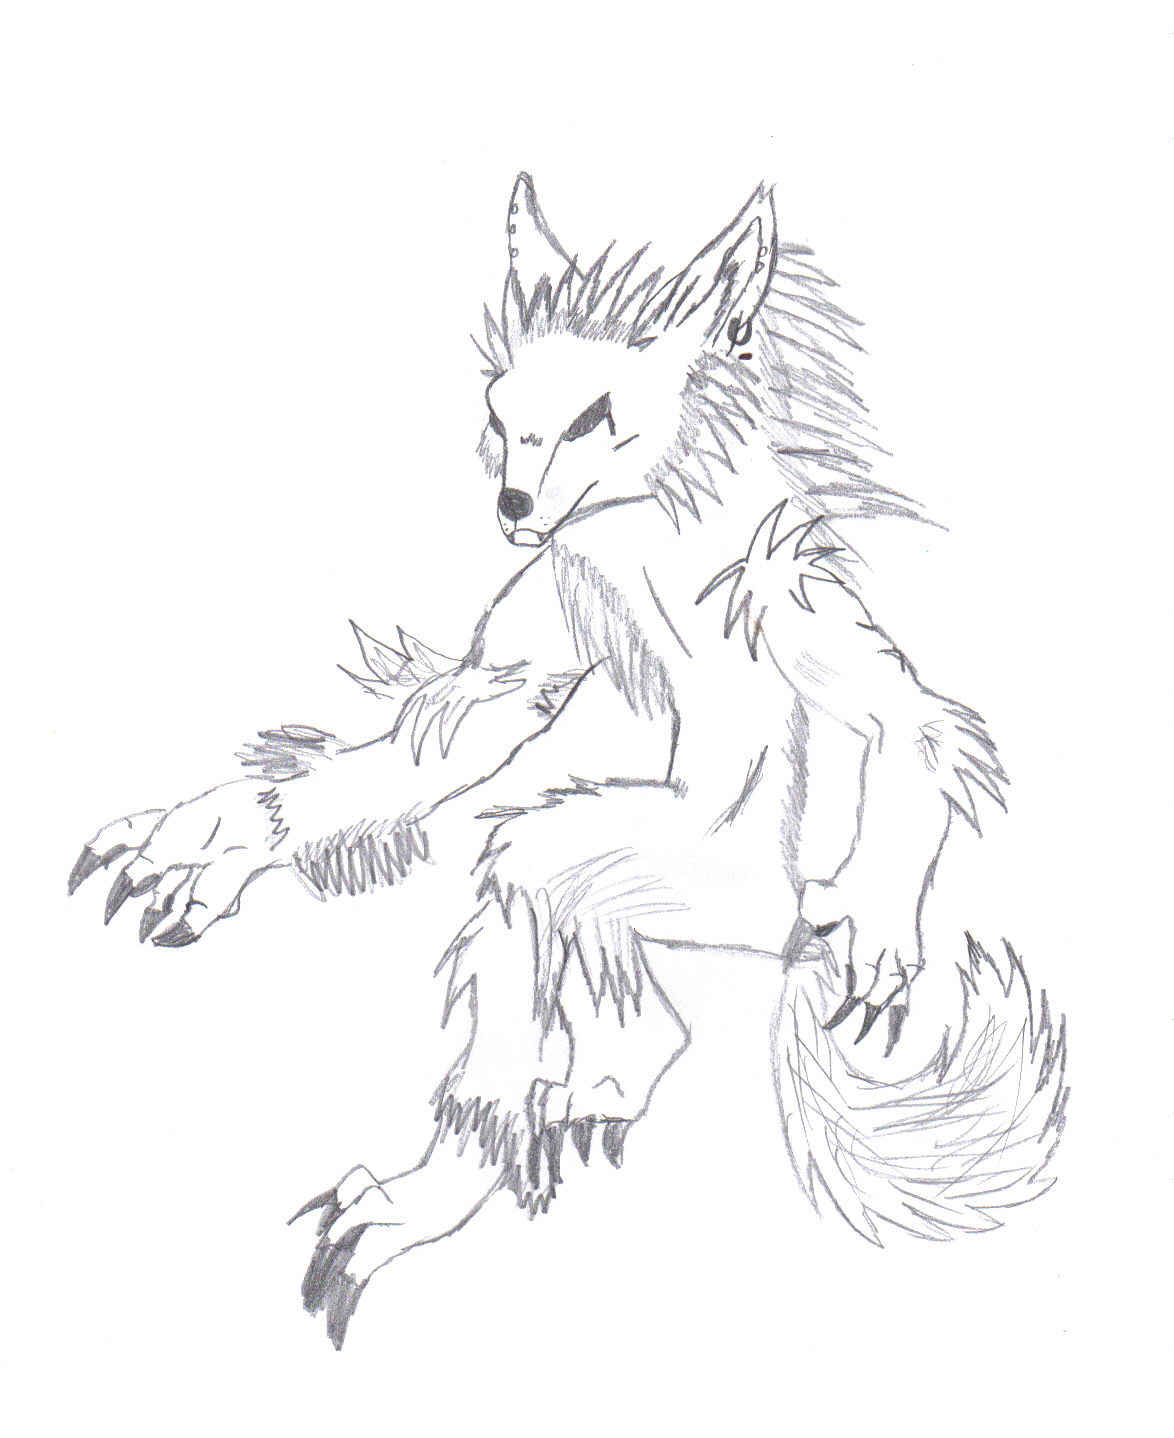 My Friend the Werewolf by Oricalcoss